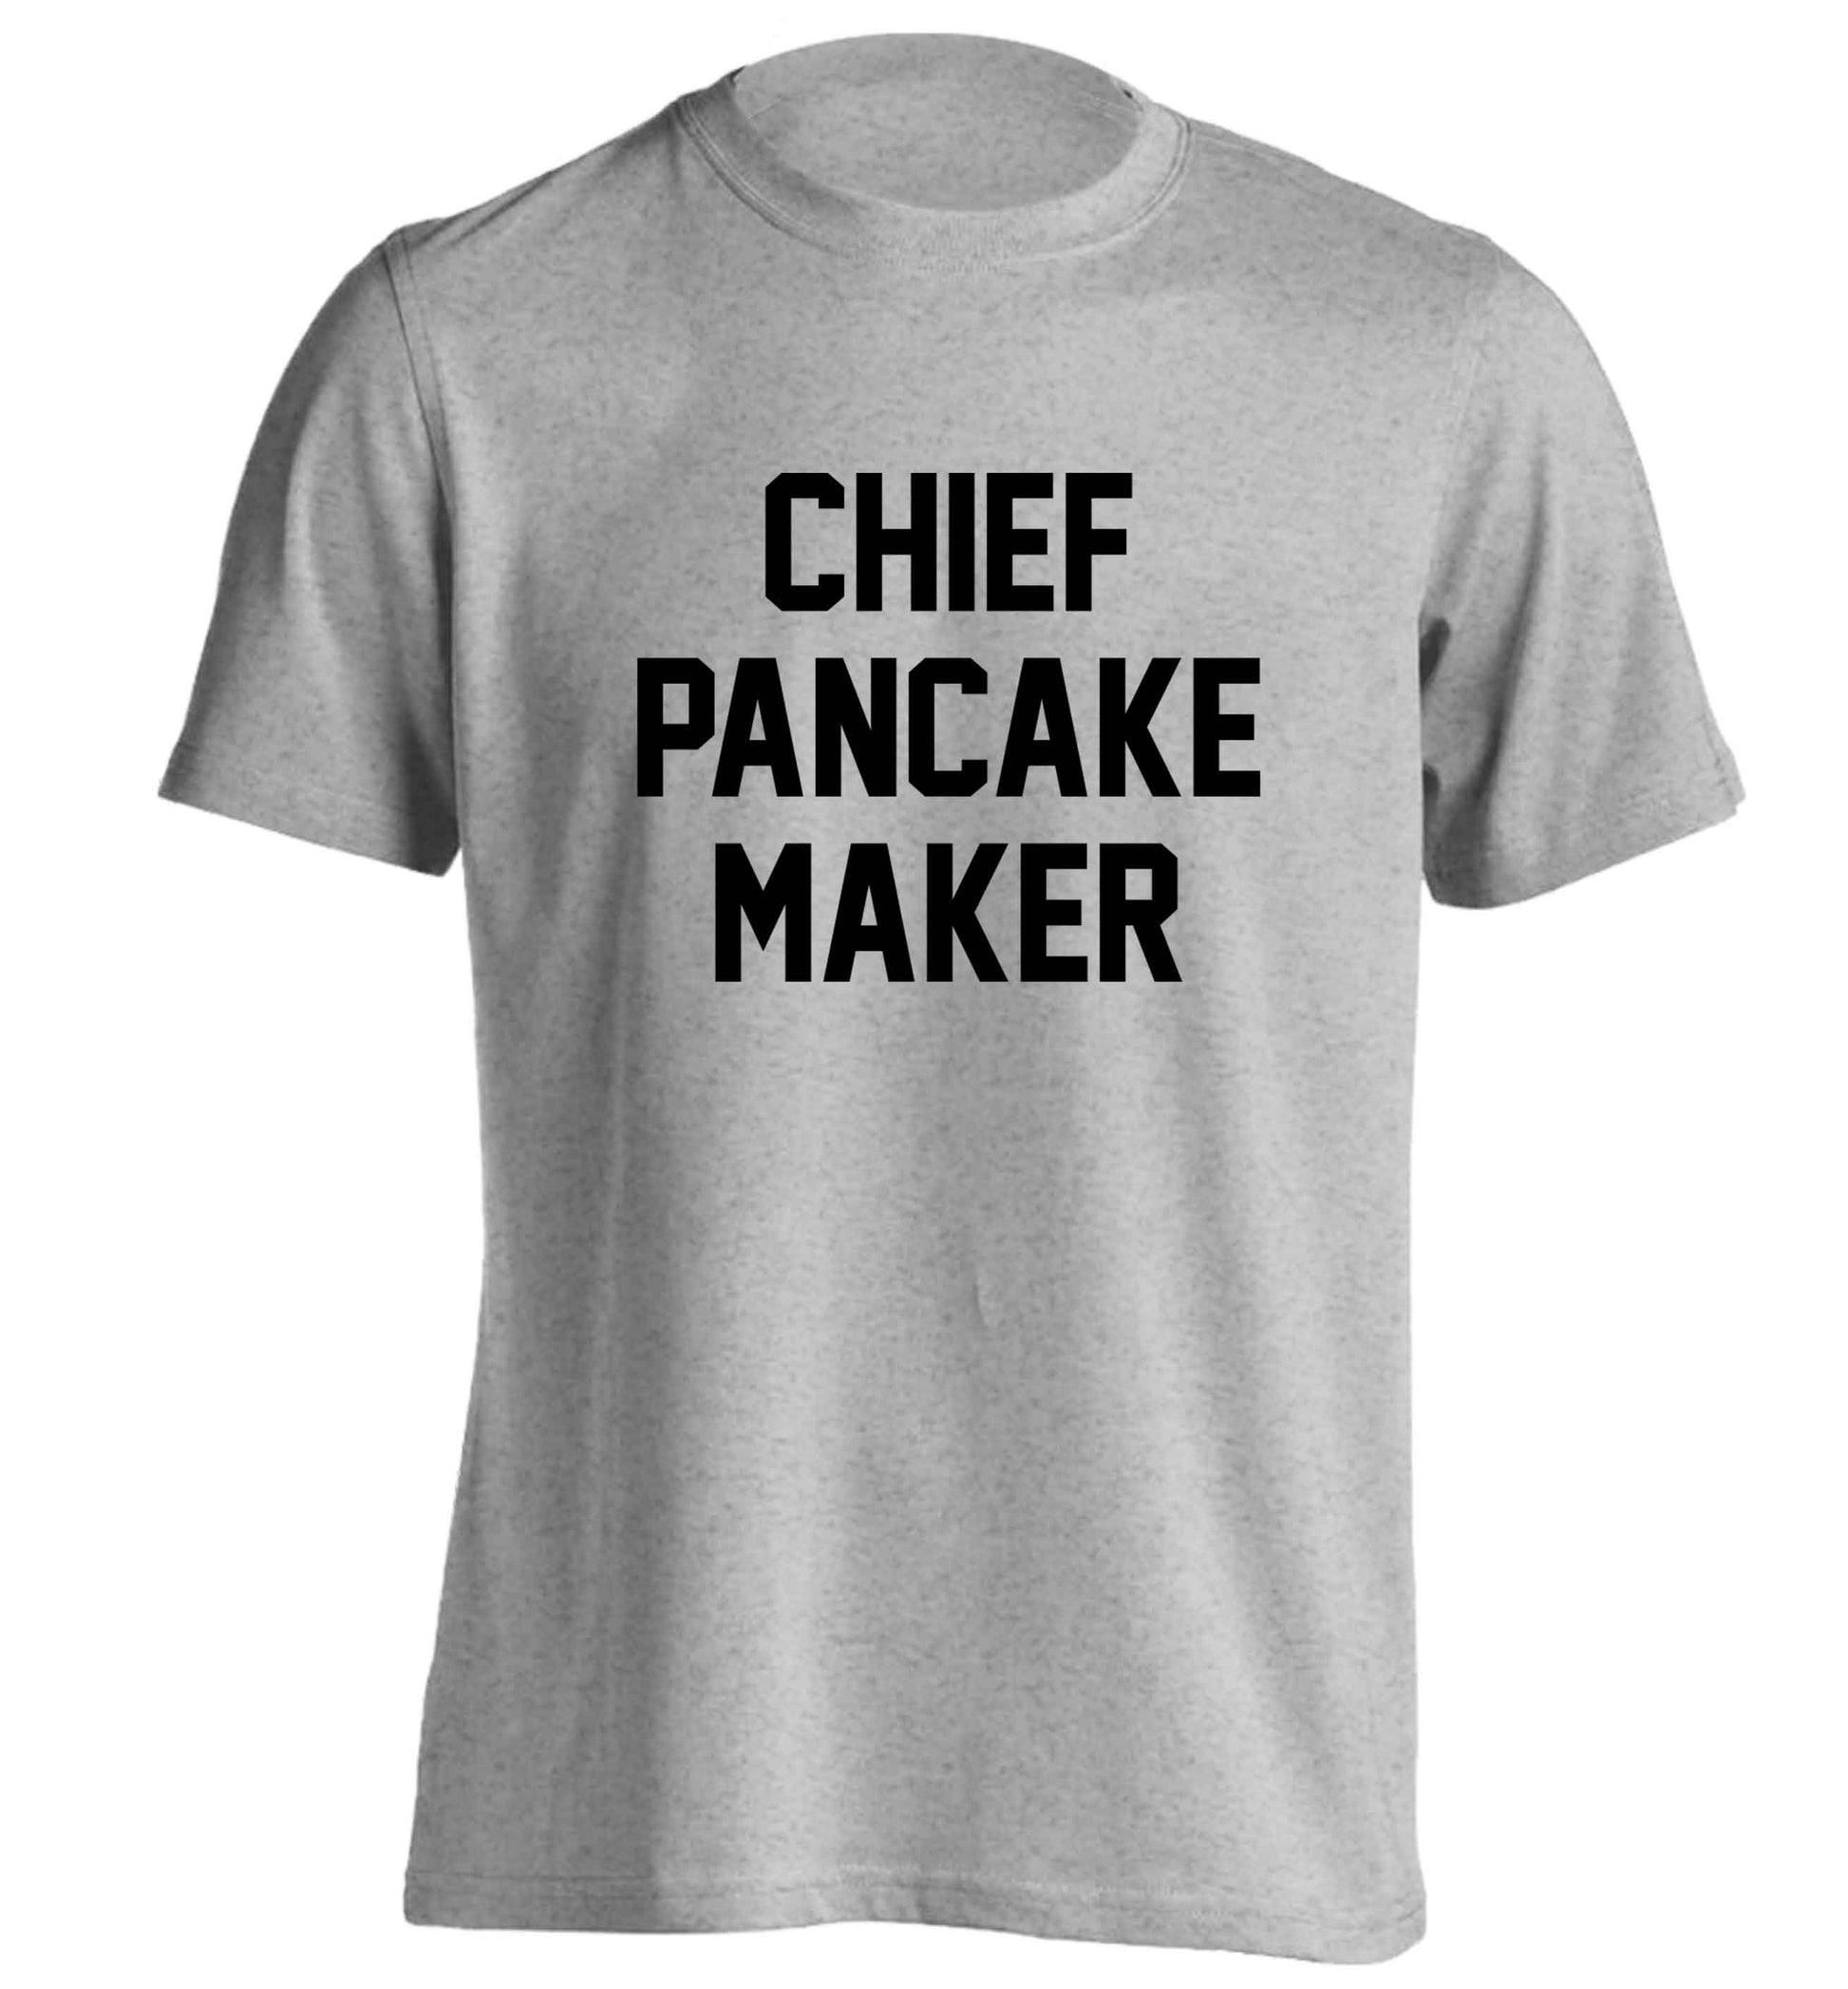 Chief pancake maker adults unisex grey Tshirt 2XL